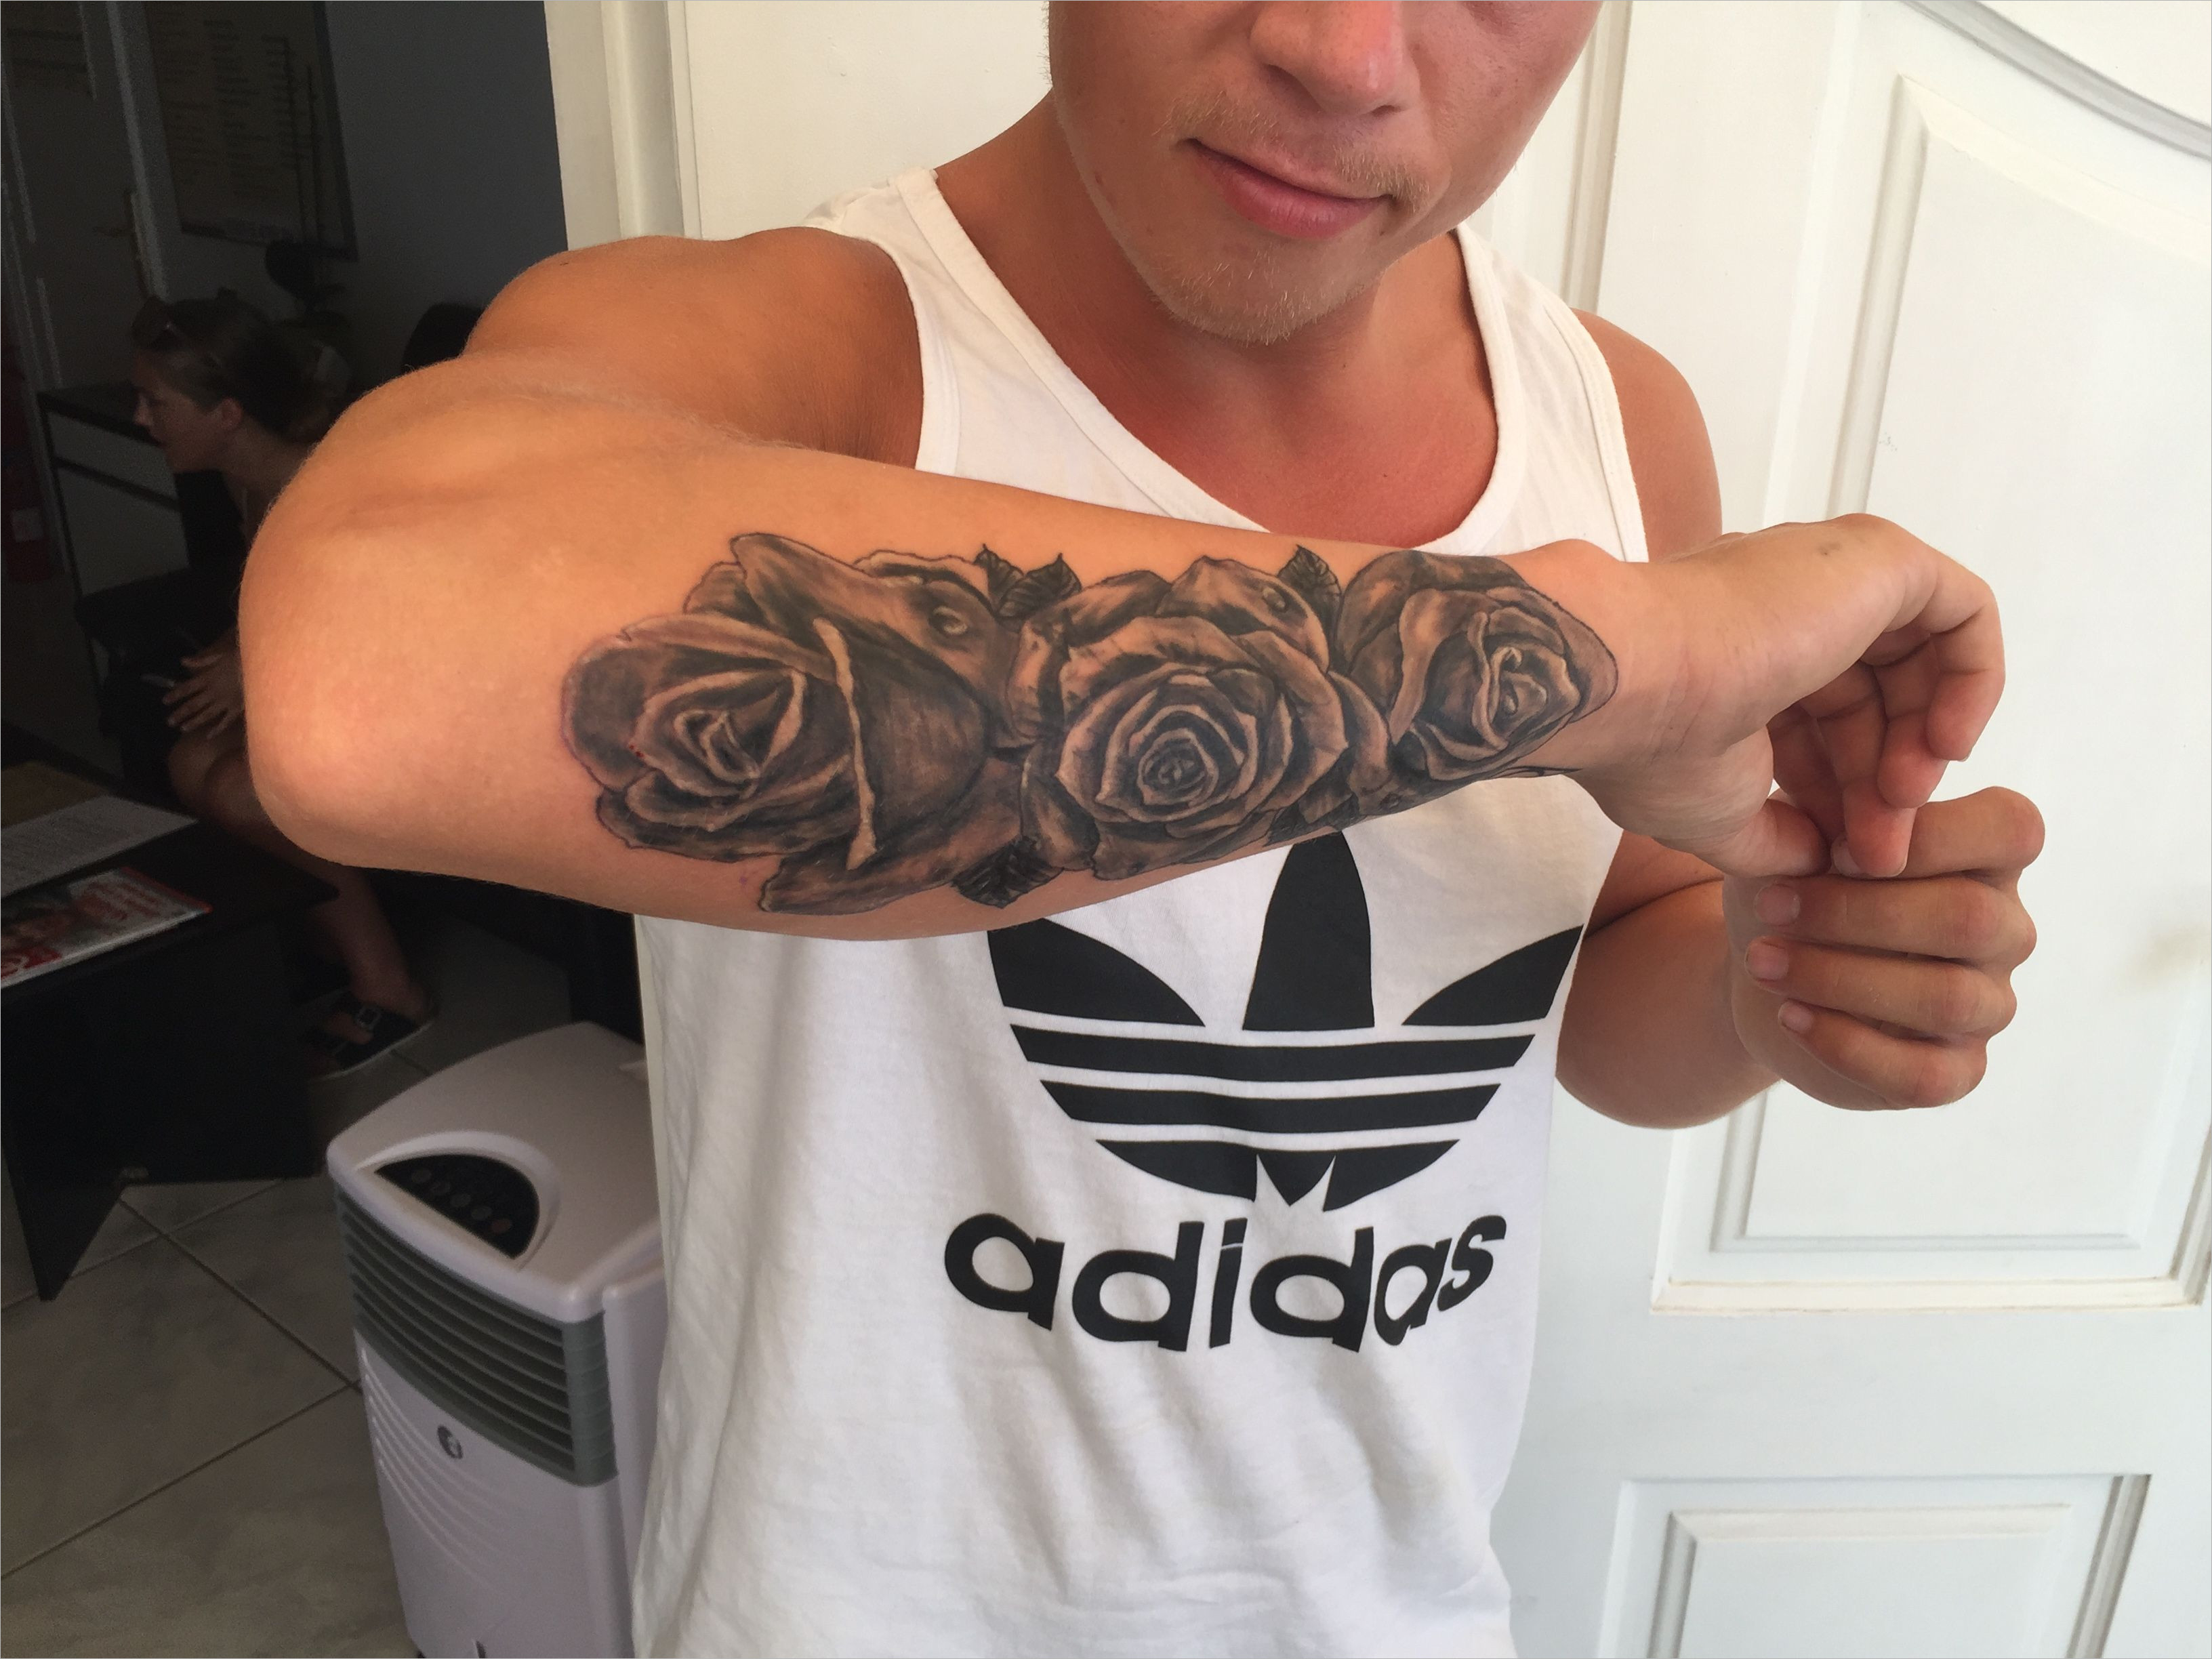 Mens Lower Arm Sleeve Tattoos Fresh 3 Roses Forearm Tattoo For Man regarding dimensions 3264 X 2448